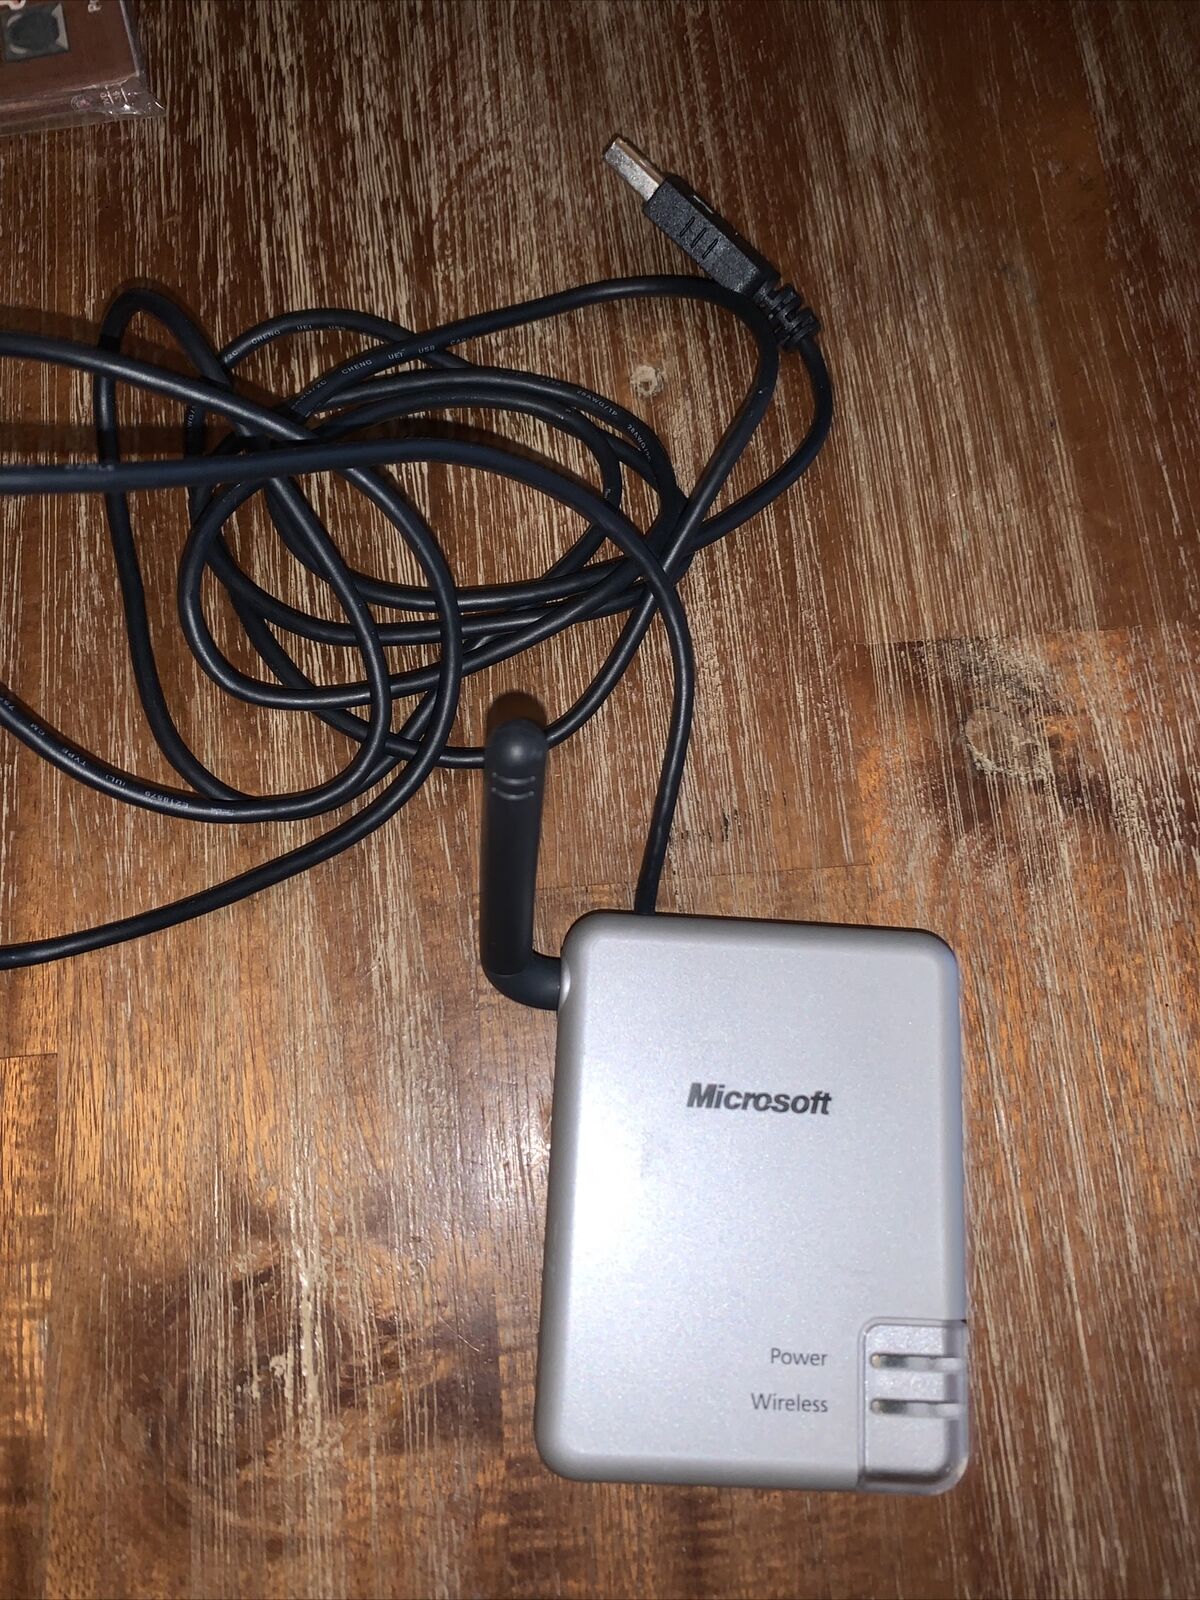 Microsoft Broadband Networking Wireless USB Adapter MN-510